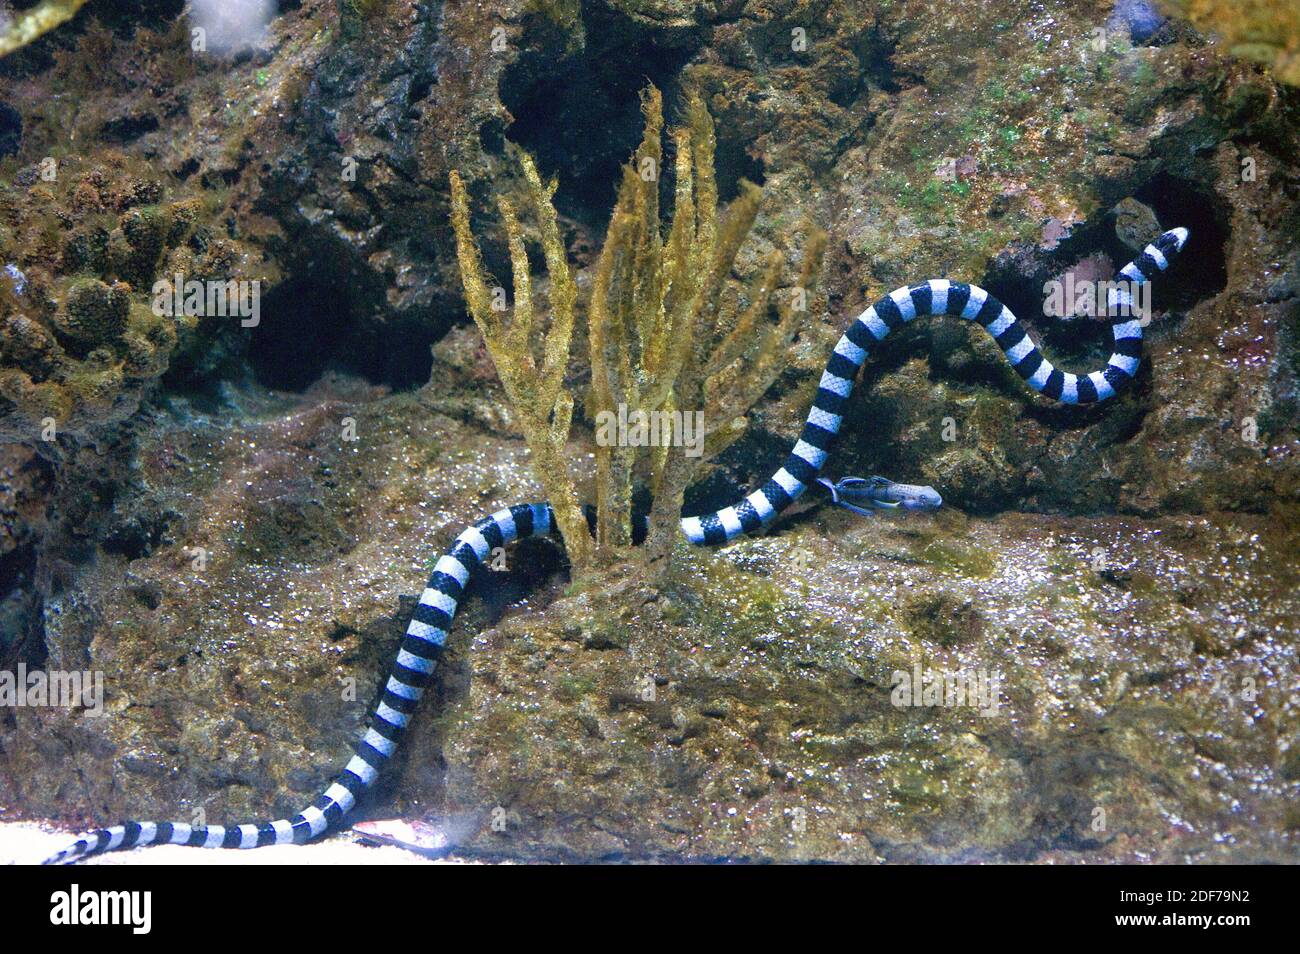 Blue-lipped sea krite (Laticauda laticaudata) is a poisonous sea snake native to western Pacific Ocean. Stock Photo